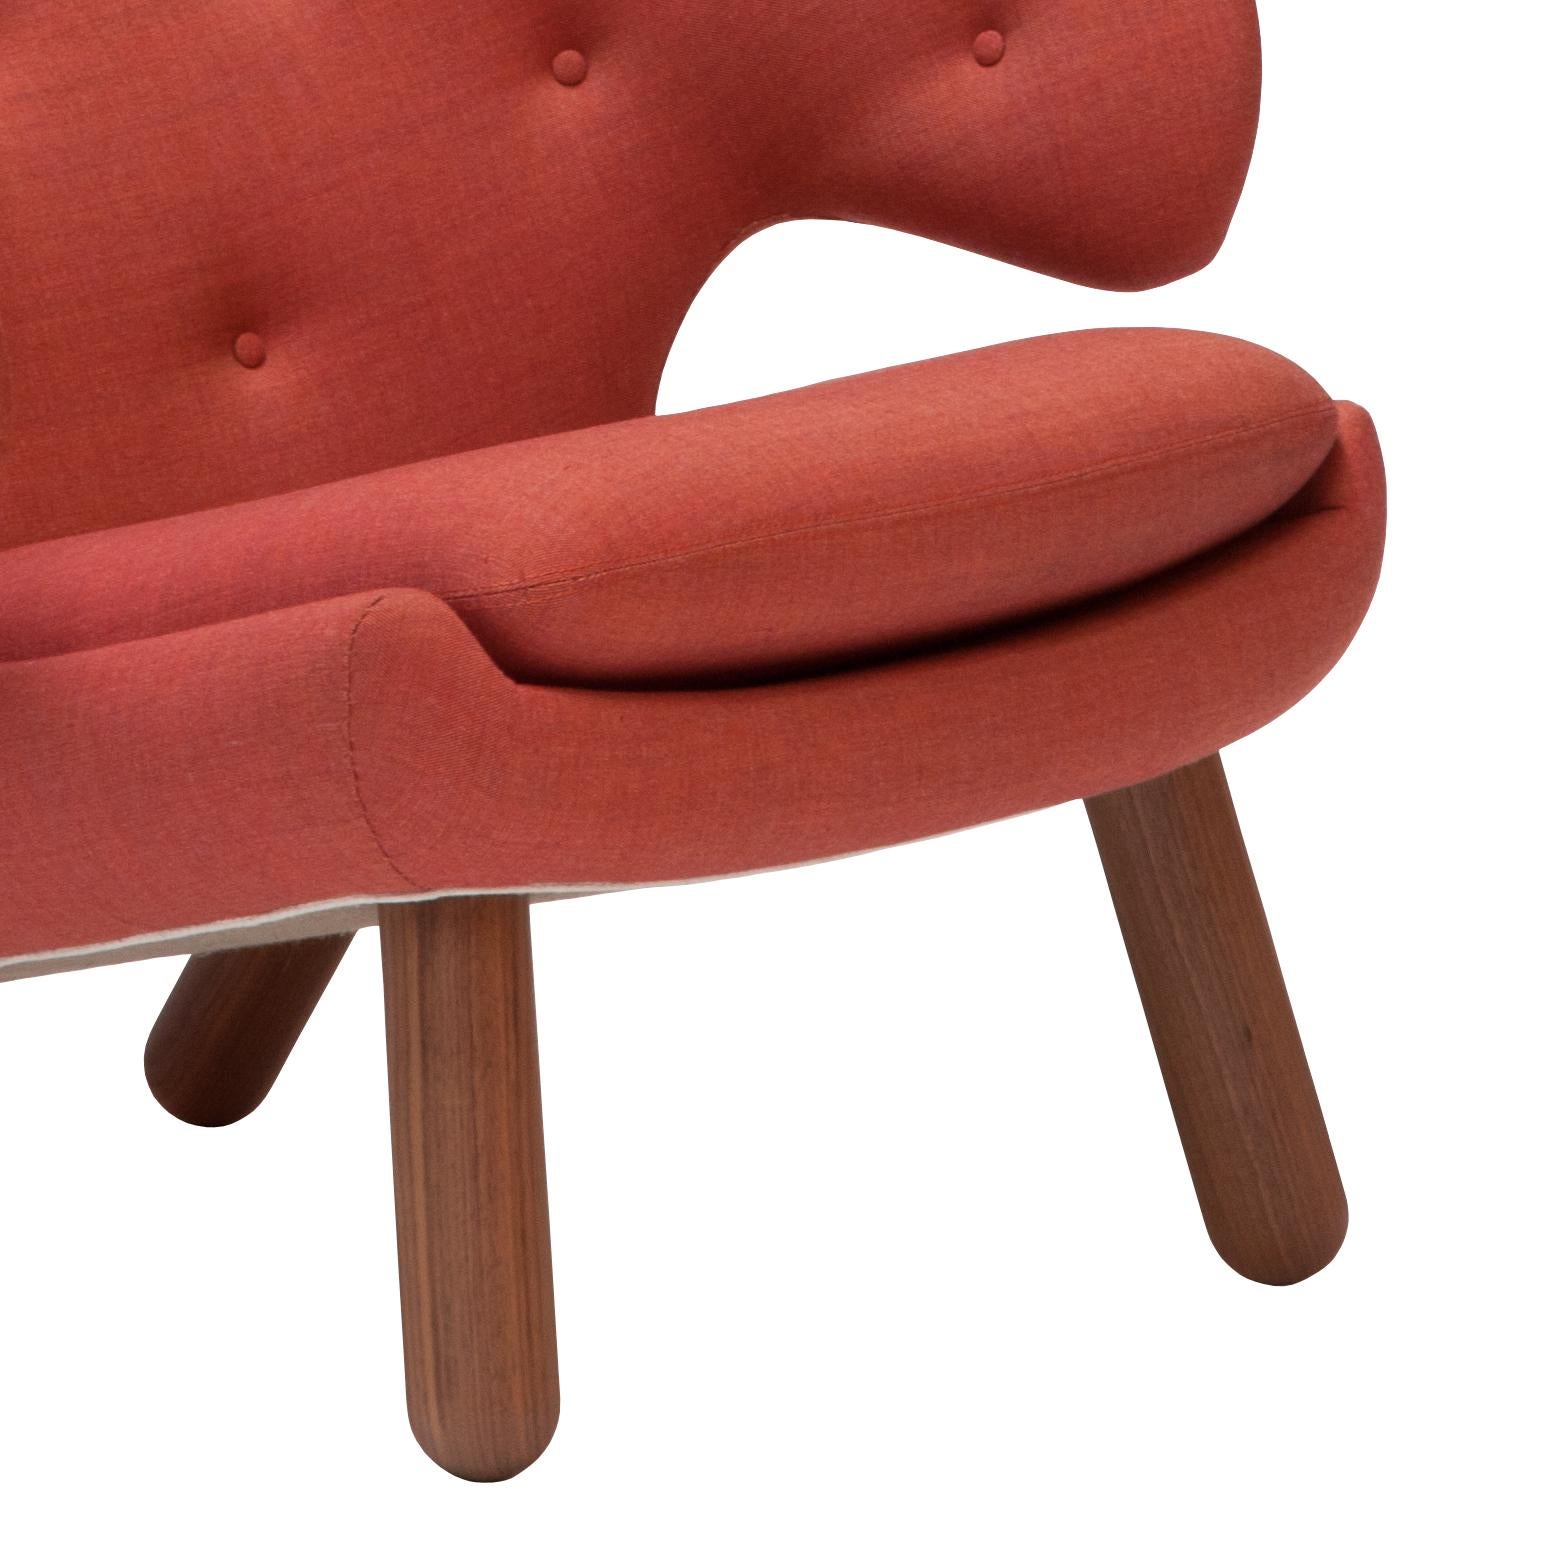 Danish Finn Juhl Pelican Chair Upholstered in Red Kvadrat Remix Fabric